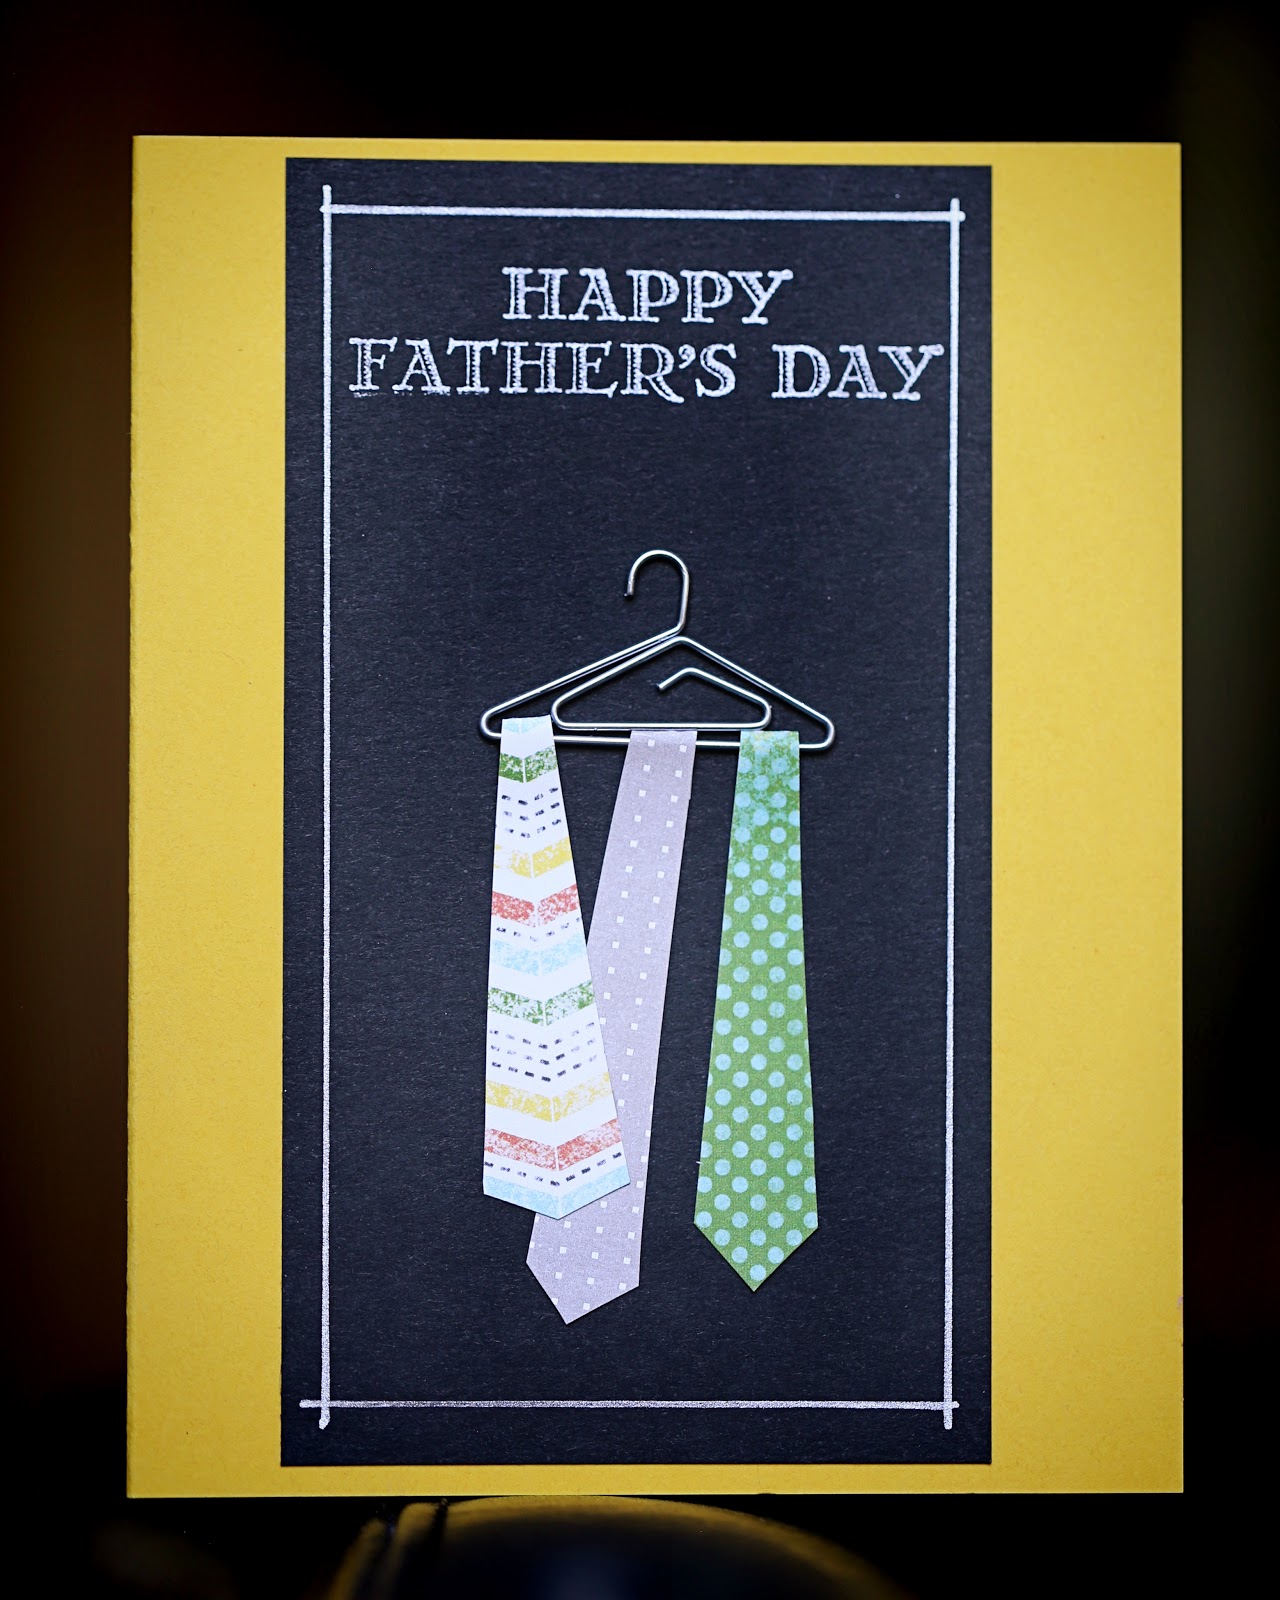 Hokiecoyote Blog: Happy Father's Day!